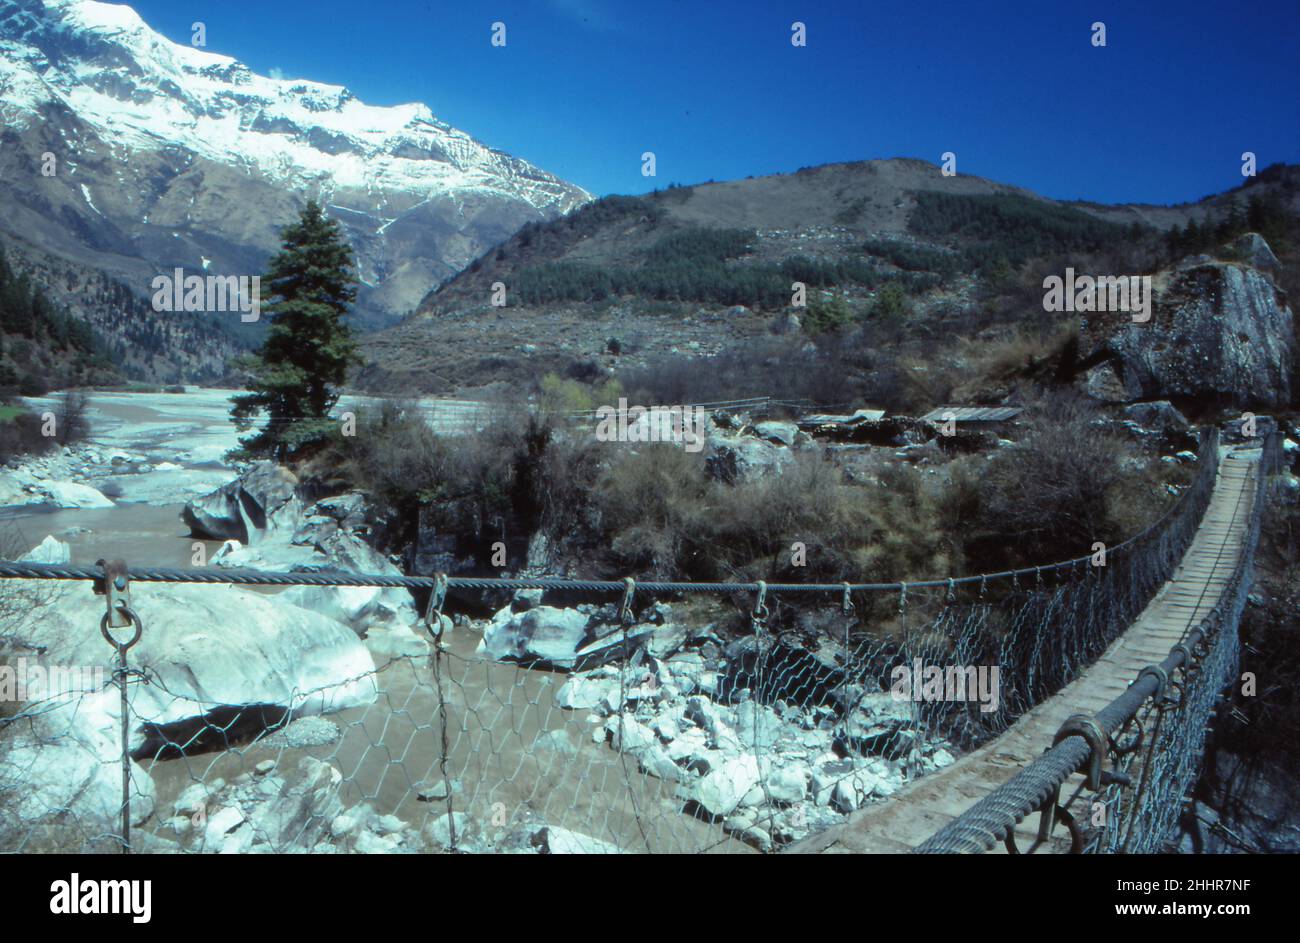 Hanging bridge in Nepal in the Himalayas mountains Annapurna Circuit Trek Stock Photo